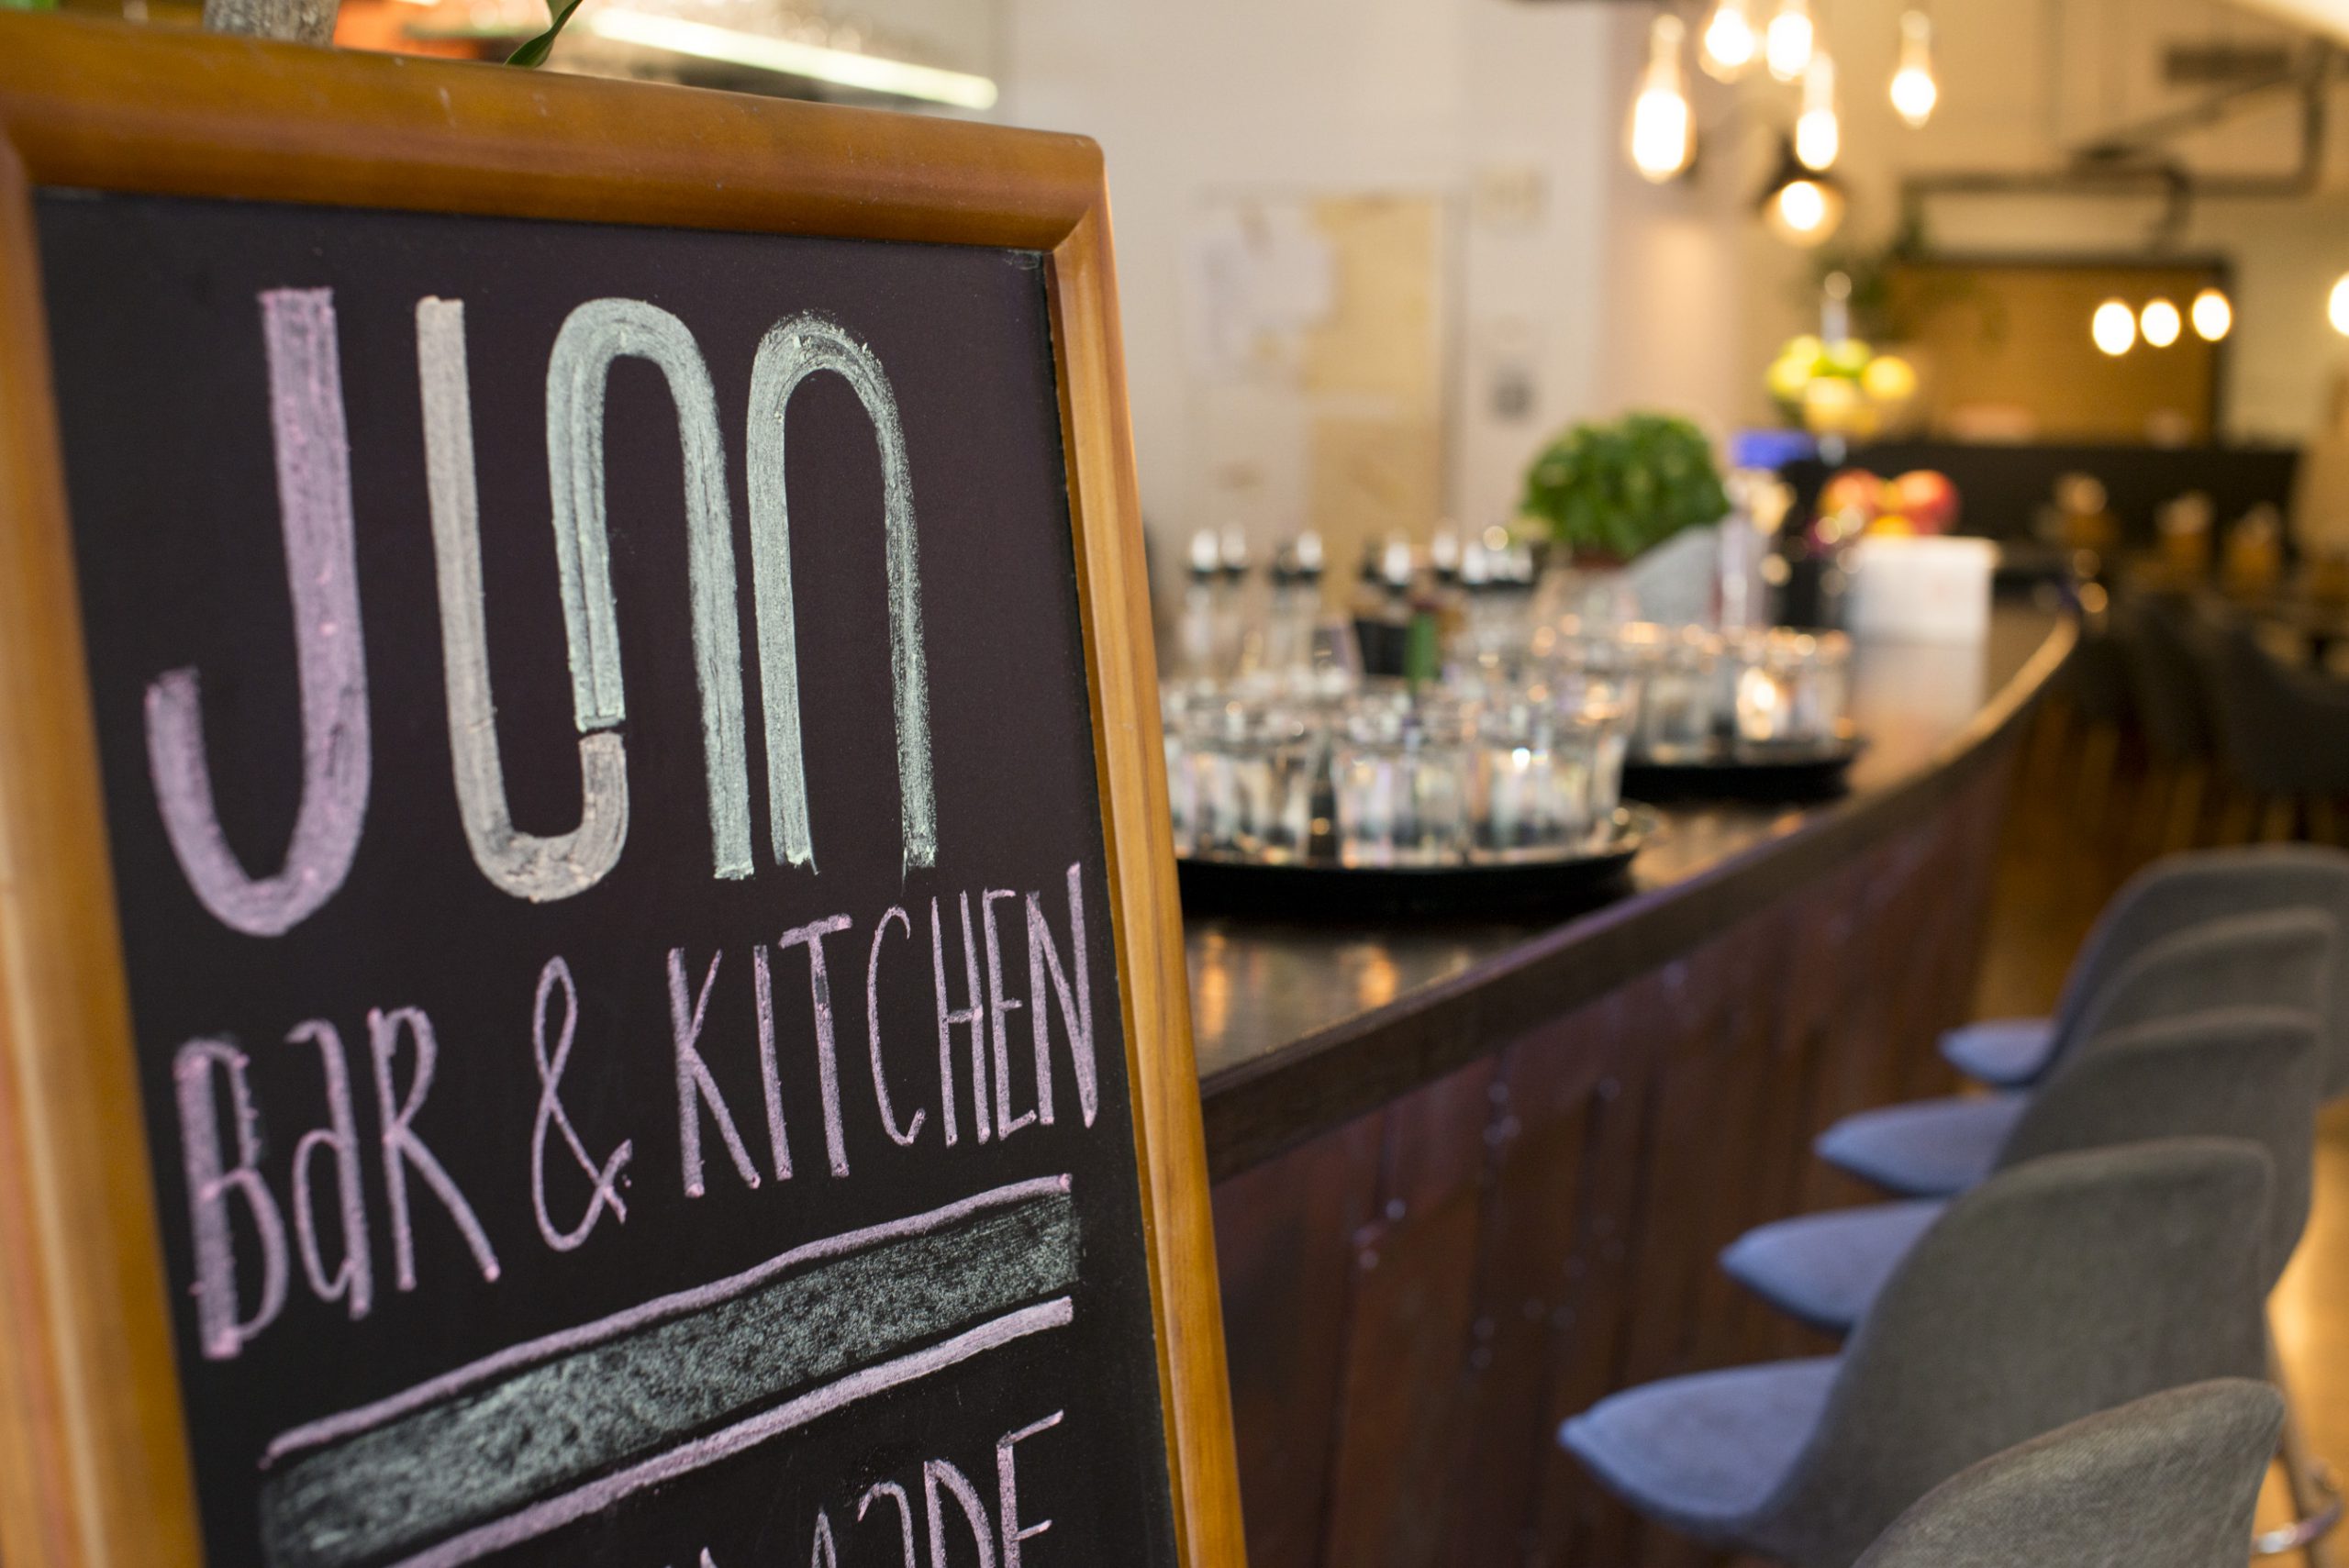 Junn Bar & Kitchen